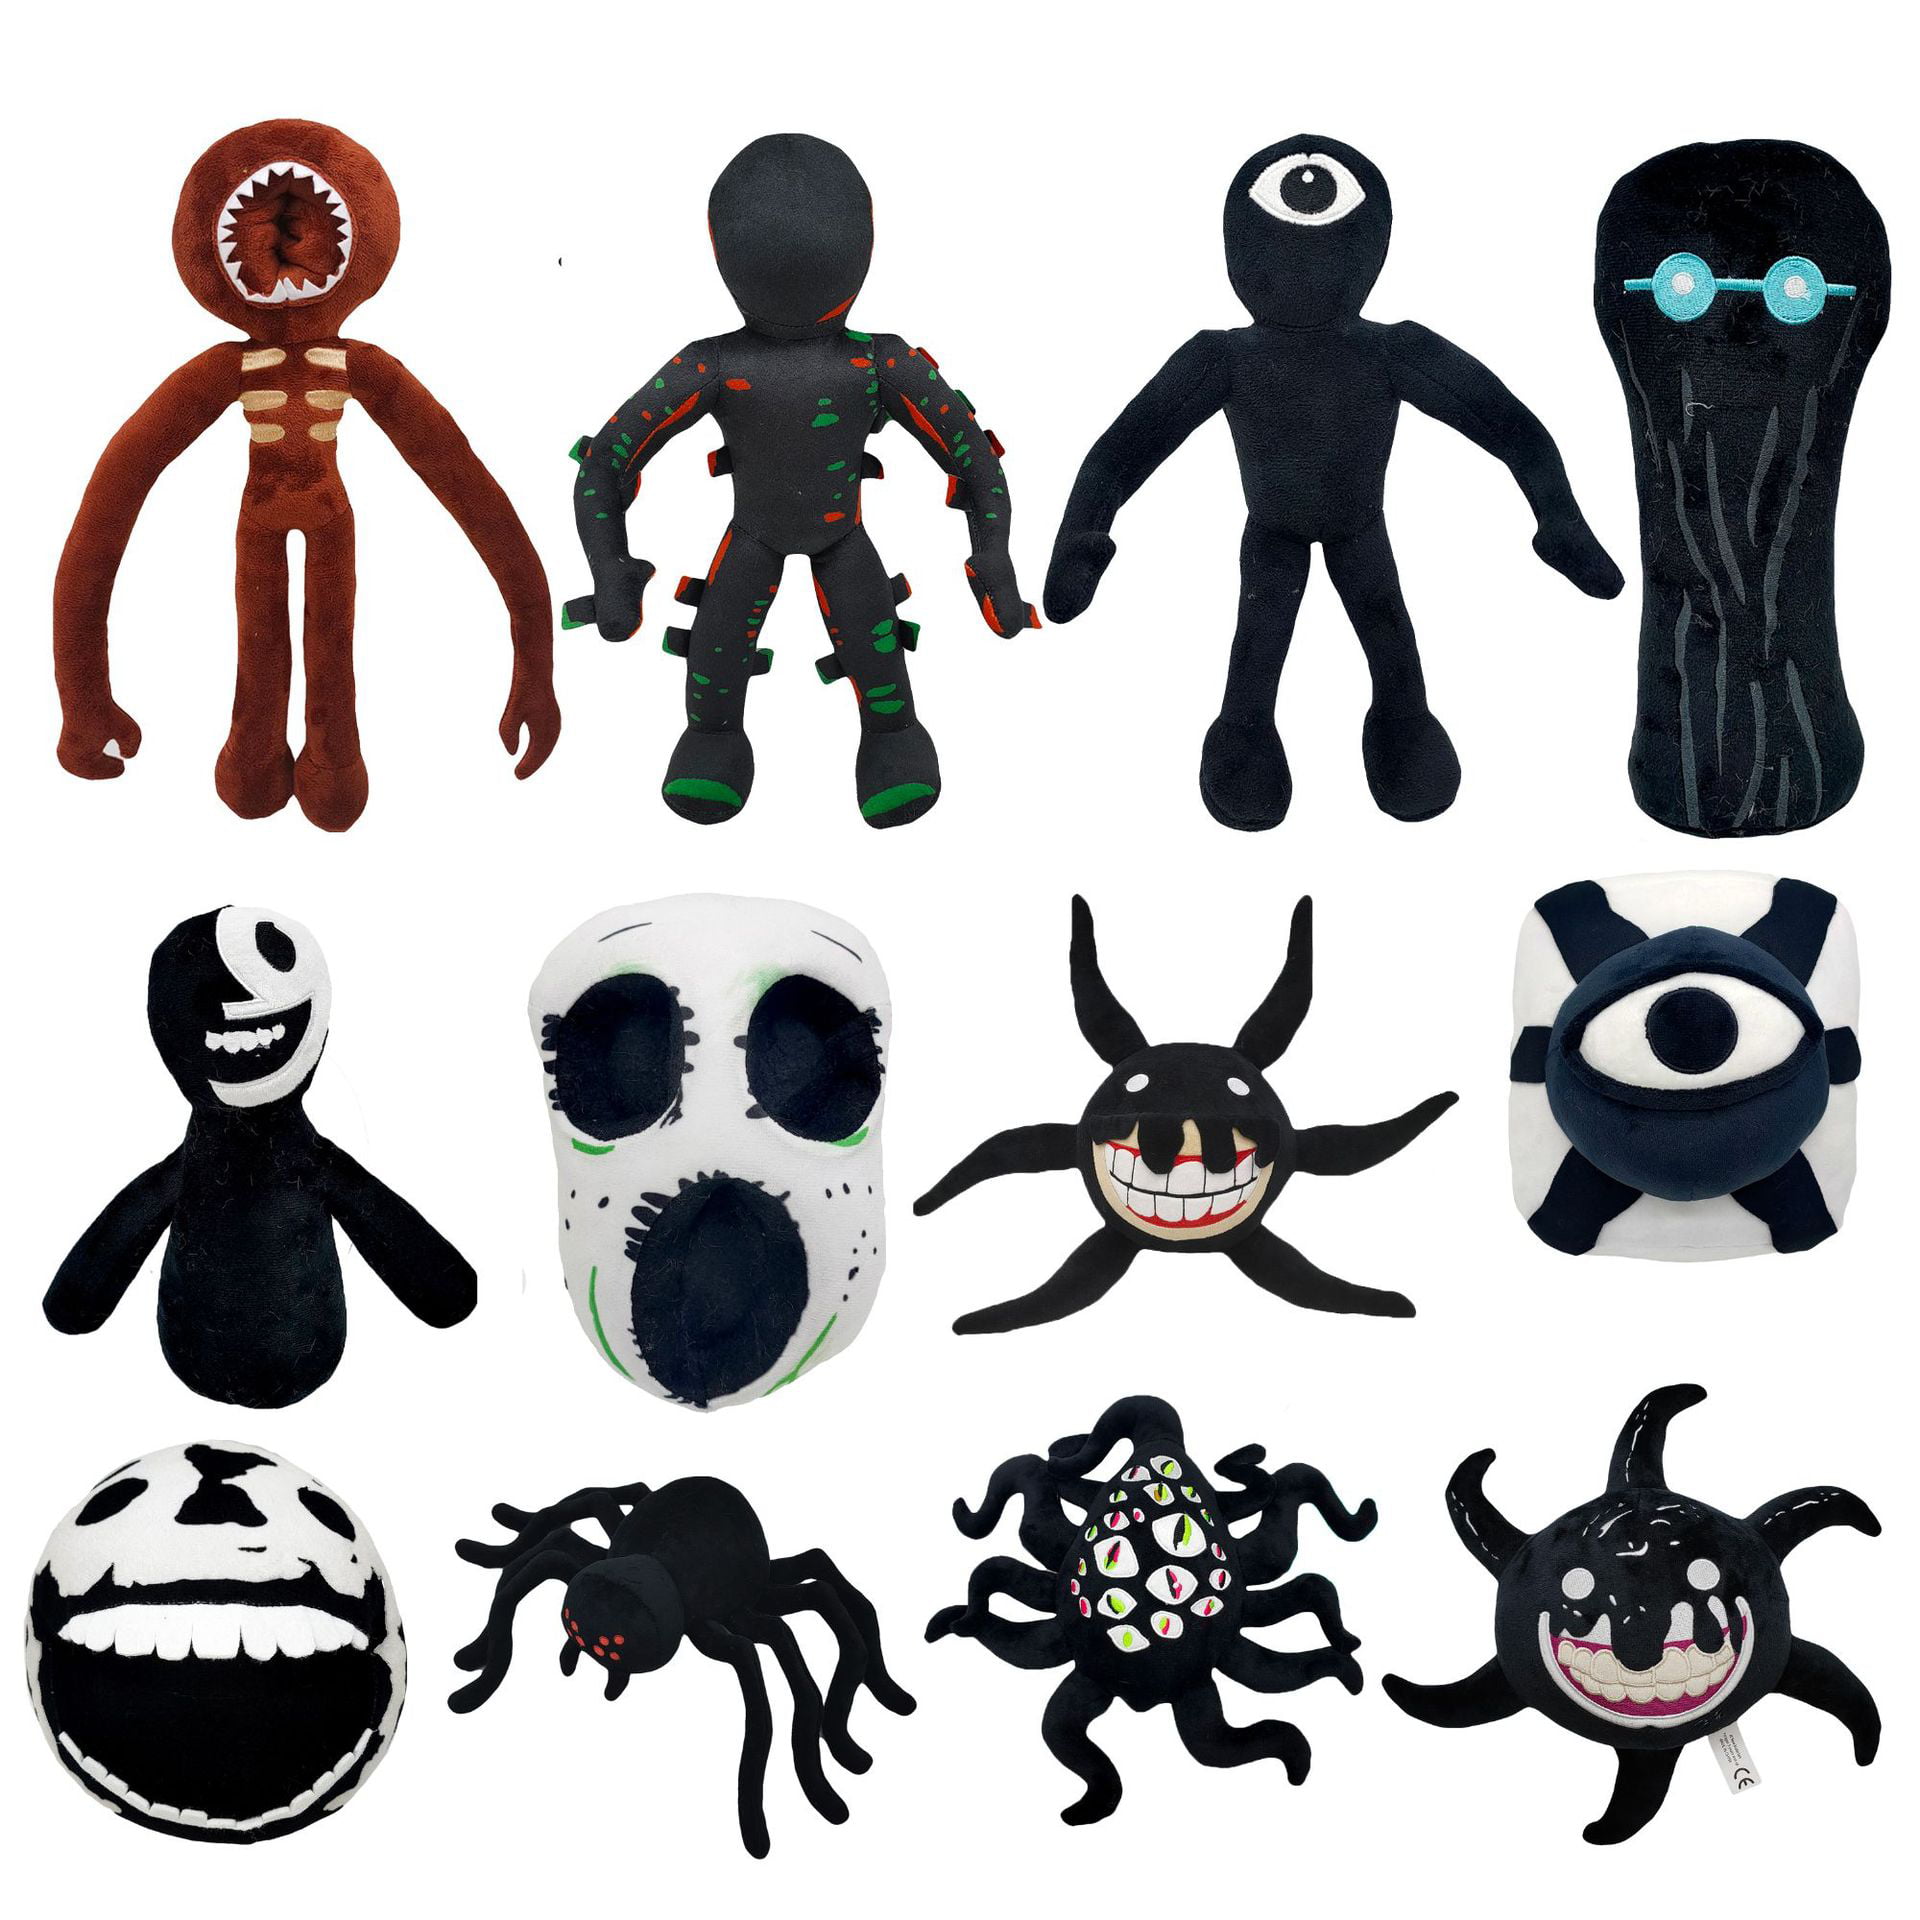 Xuspuqon Doors Plush Toys New Monster Horror Games Cute Night